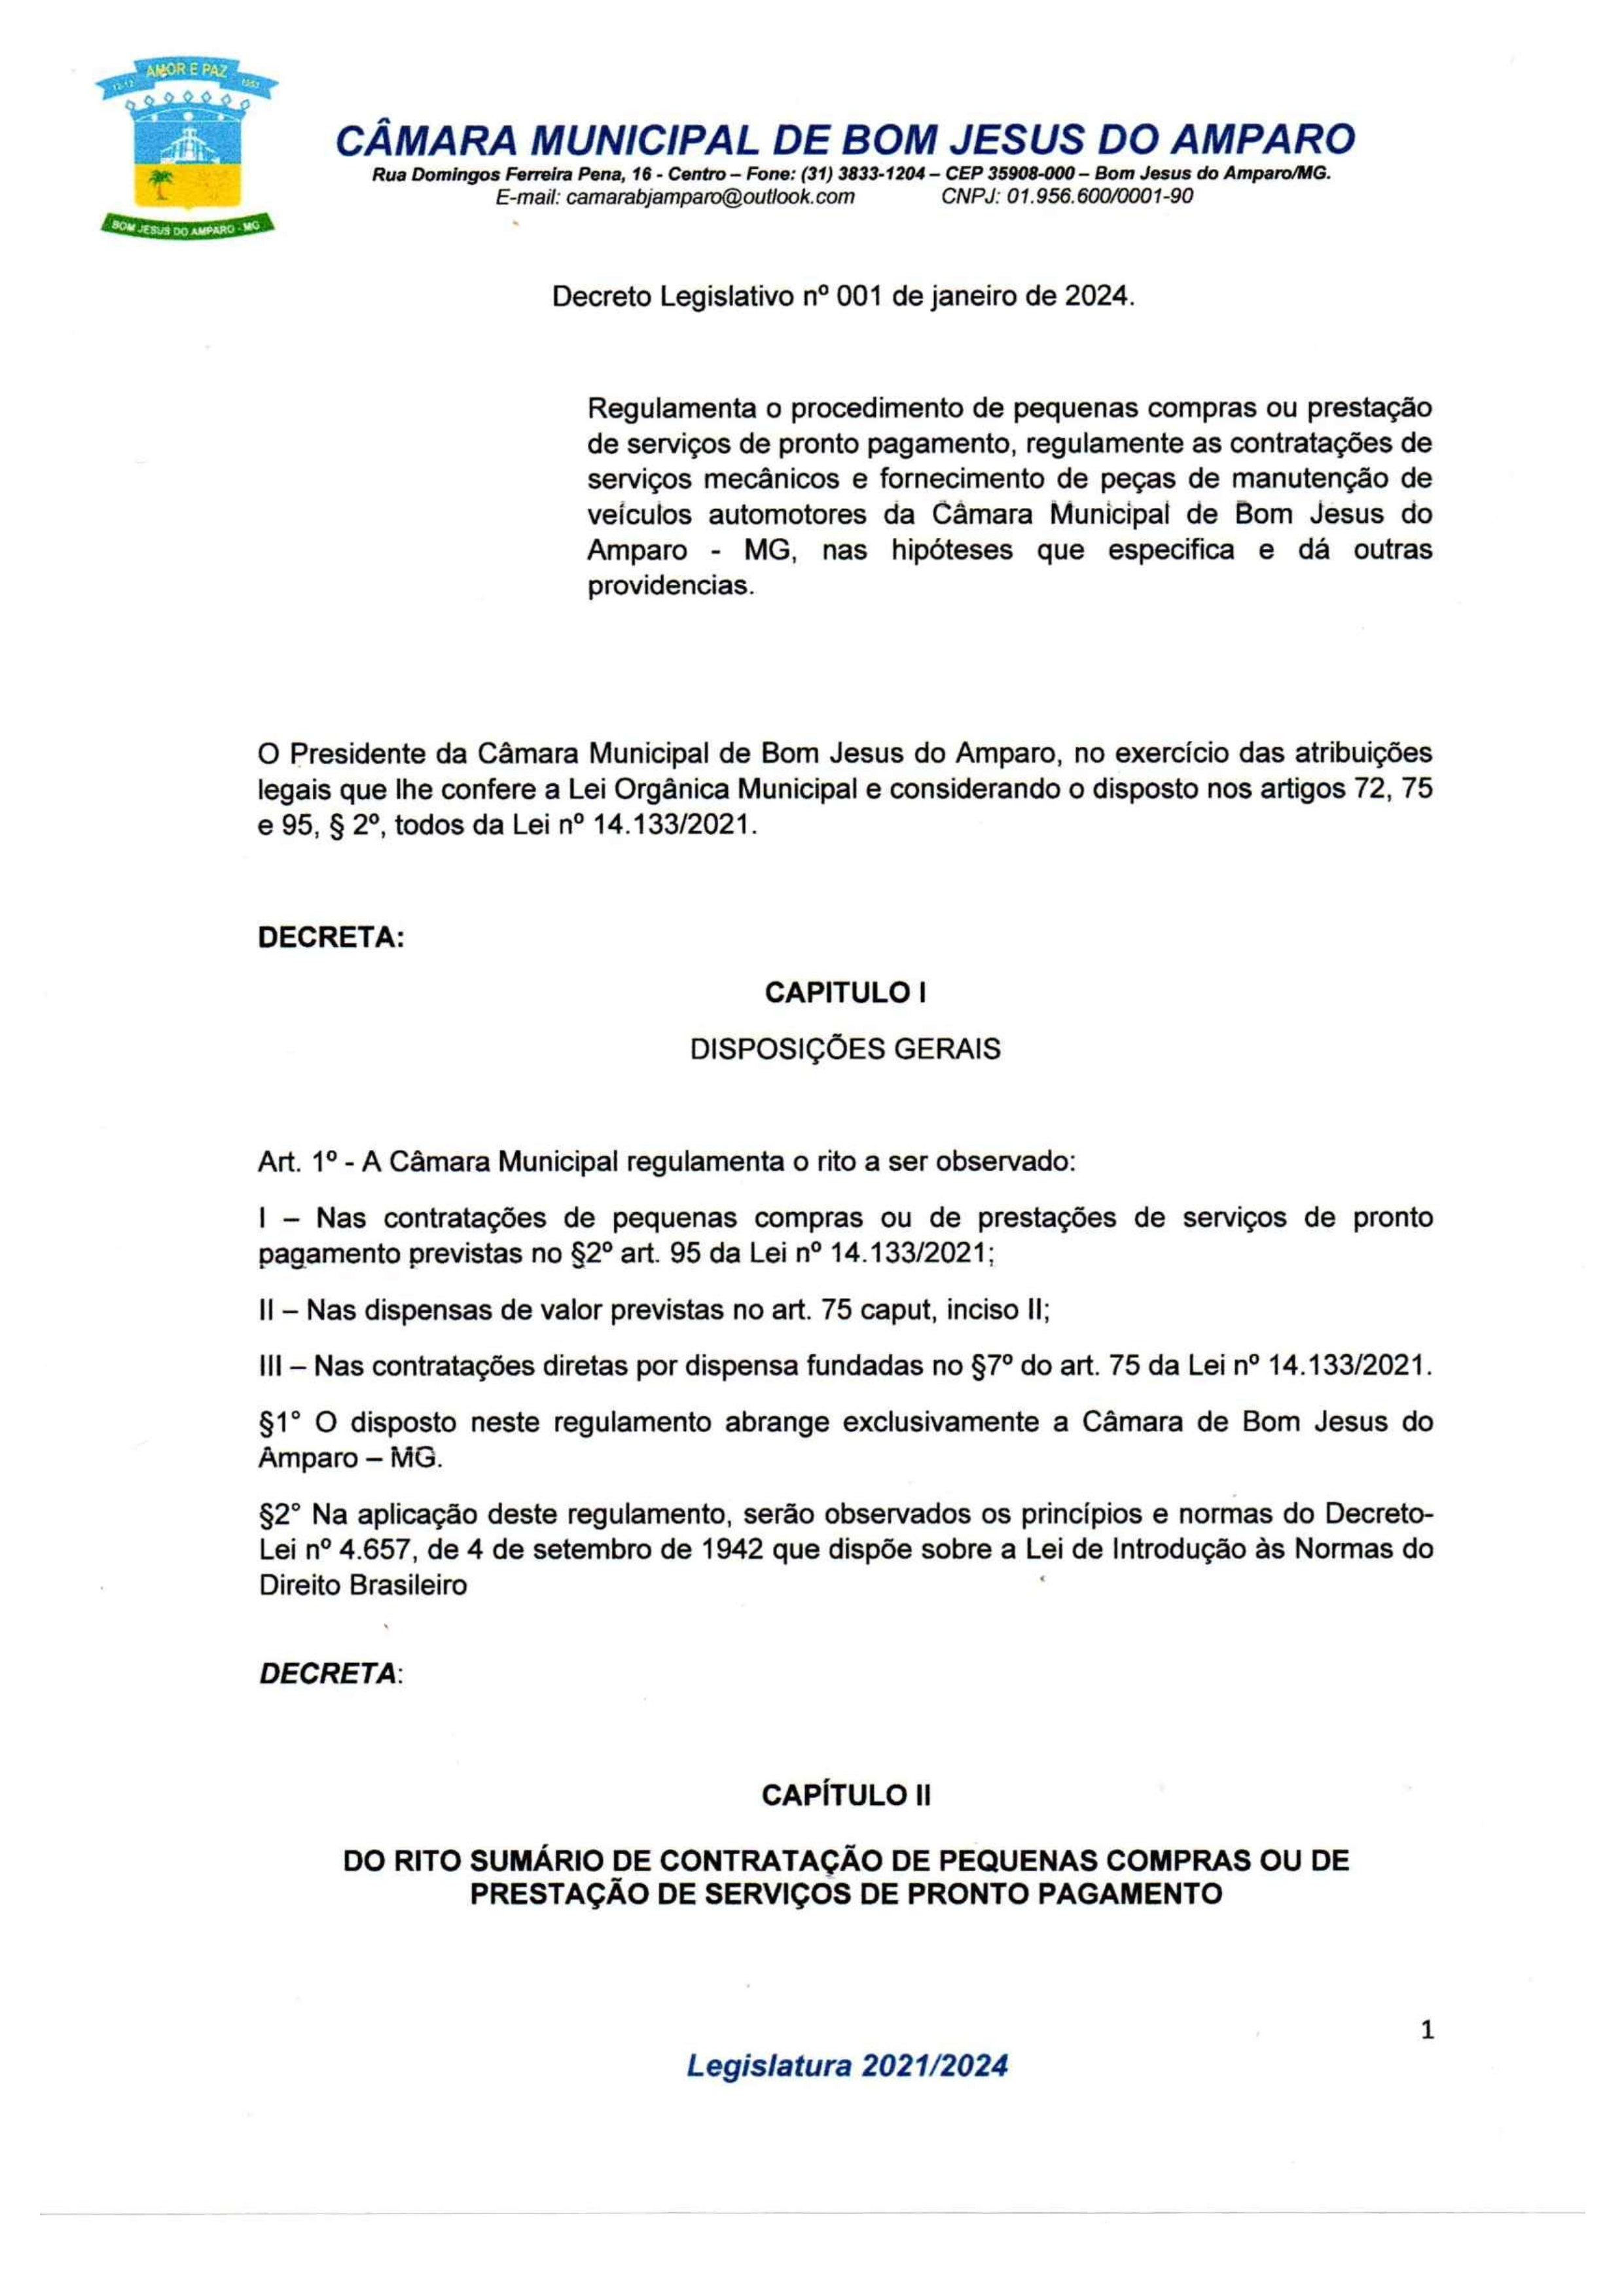 Decreto Legislativo n.º 01/2024 pág. 1